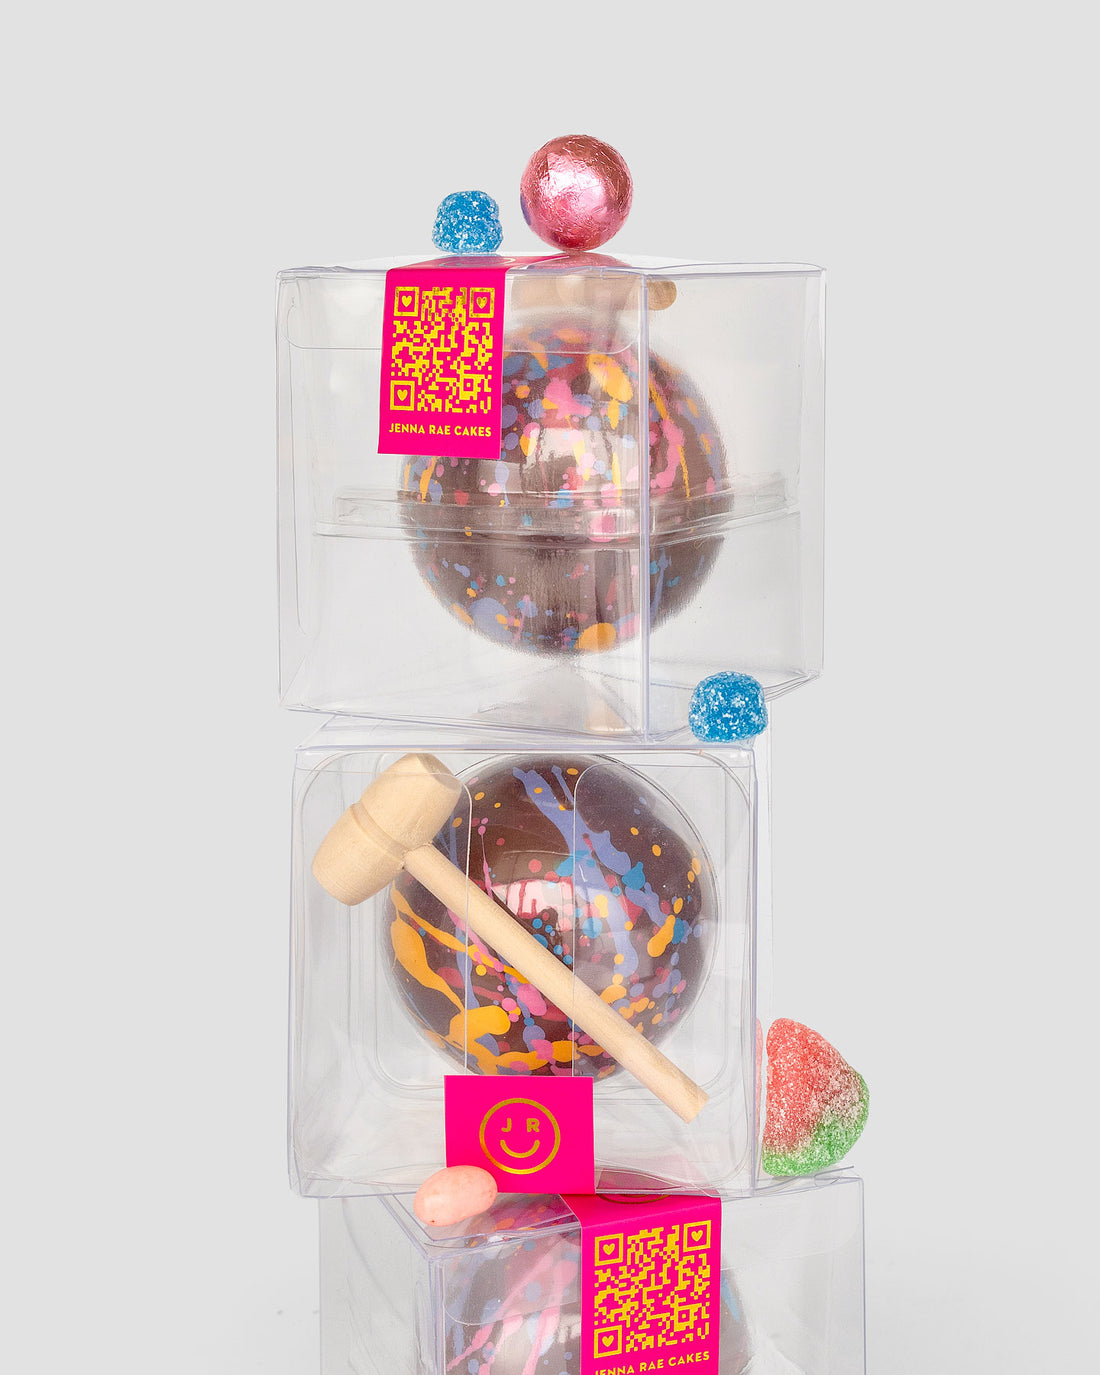 Candy Bombs Shipper Box